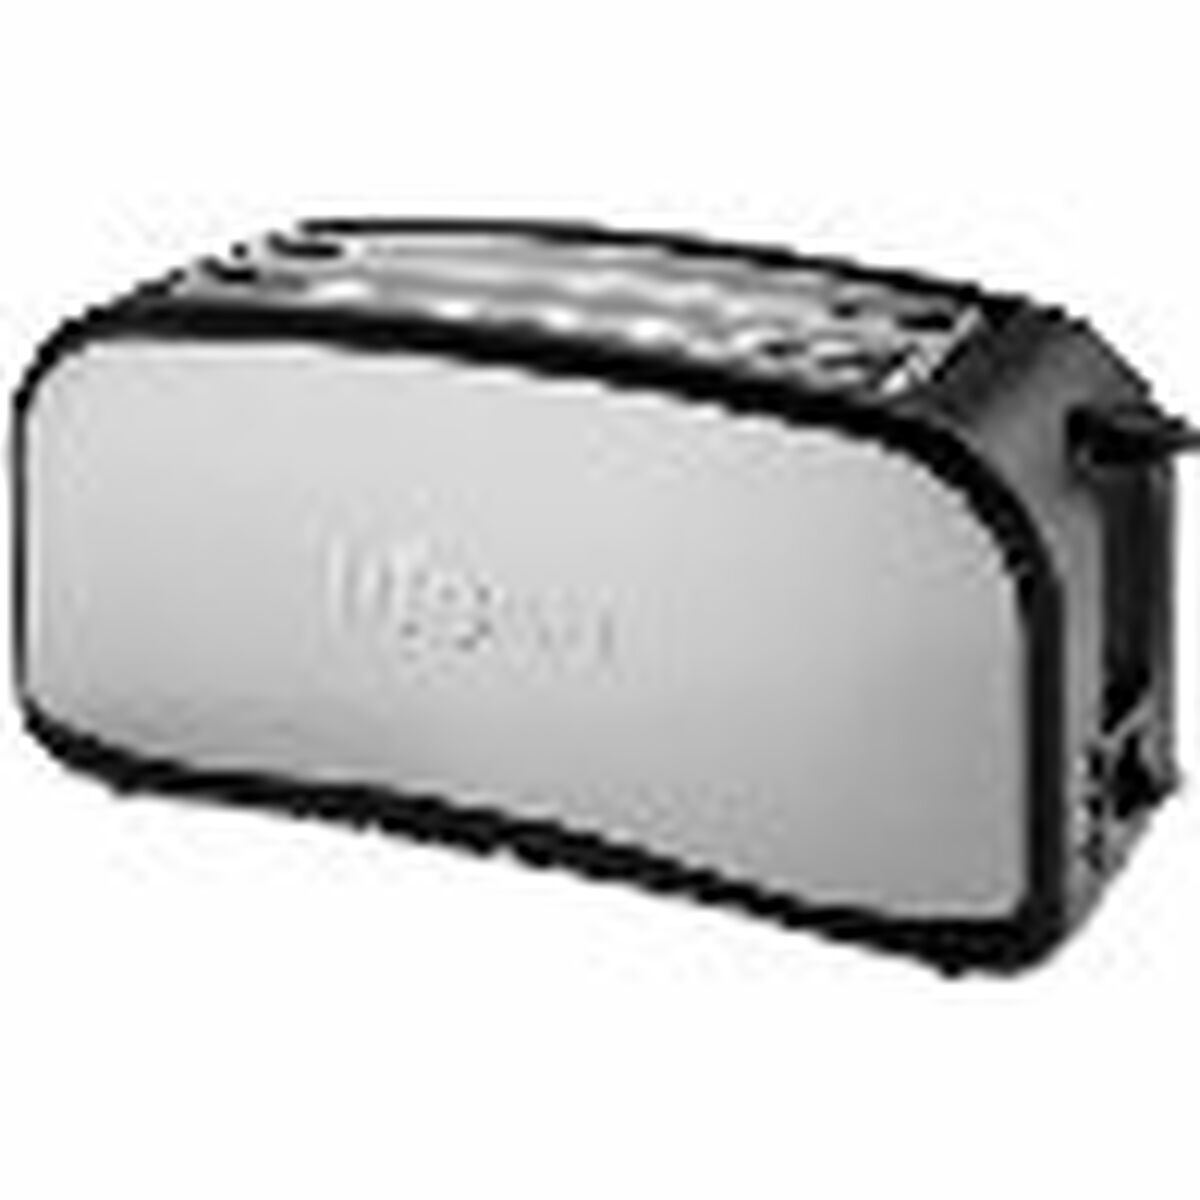 Toaster UFESA TT7975 OPTIMA 1400 W - CA International 